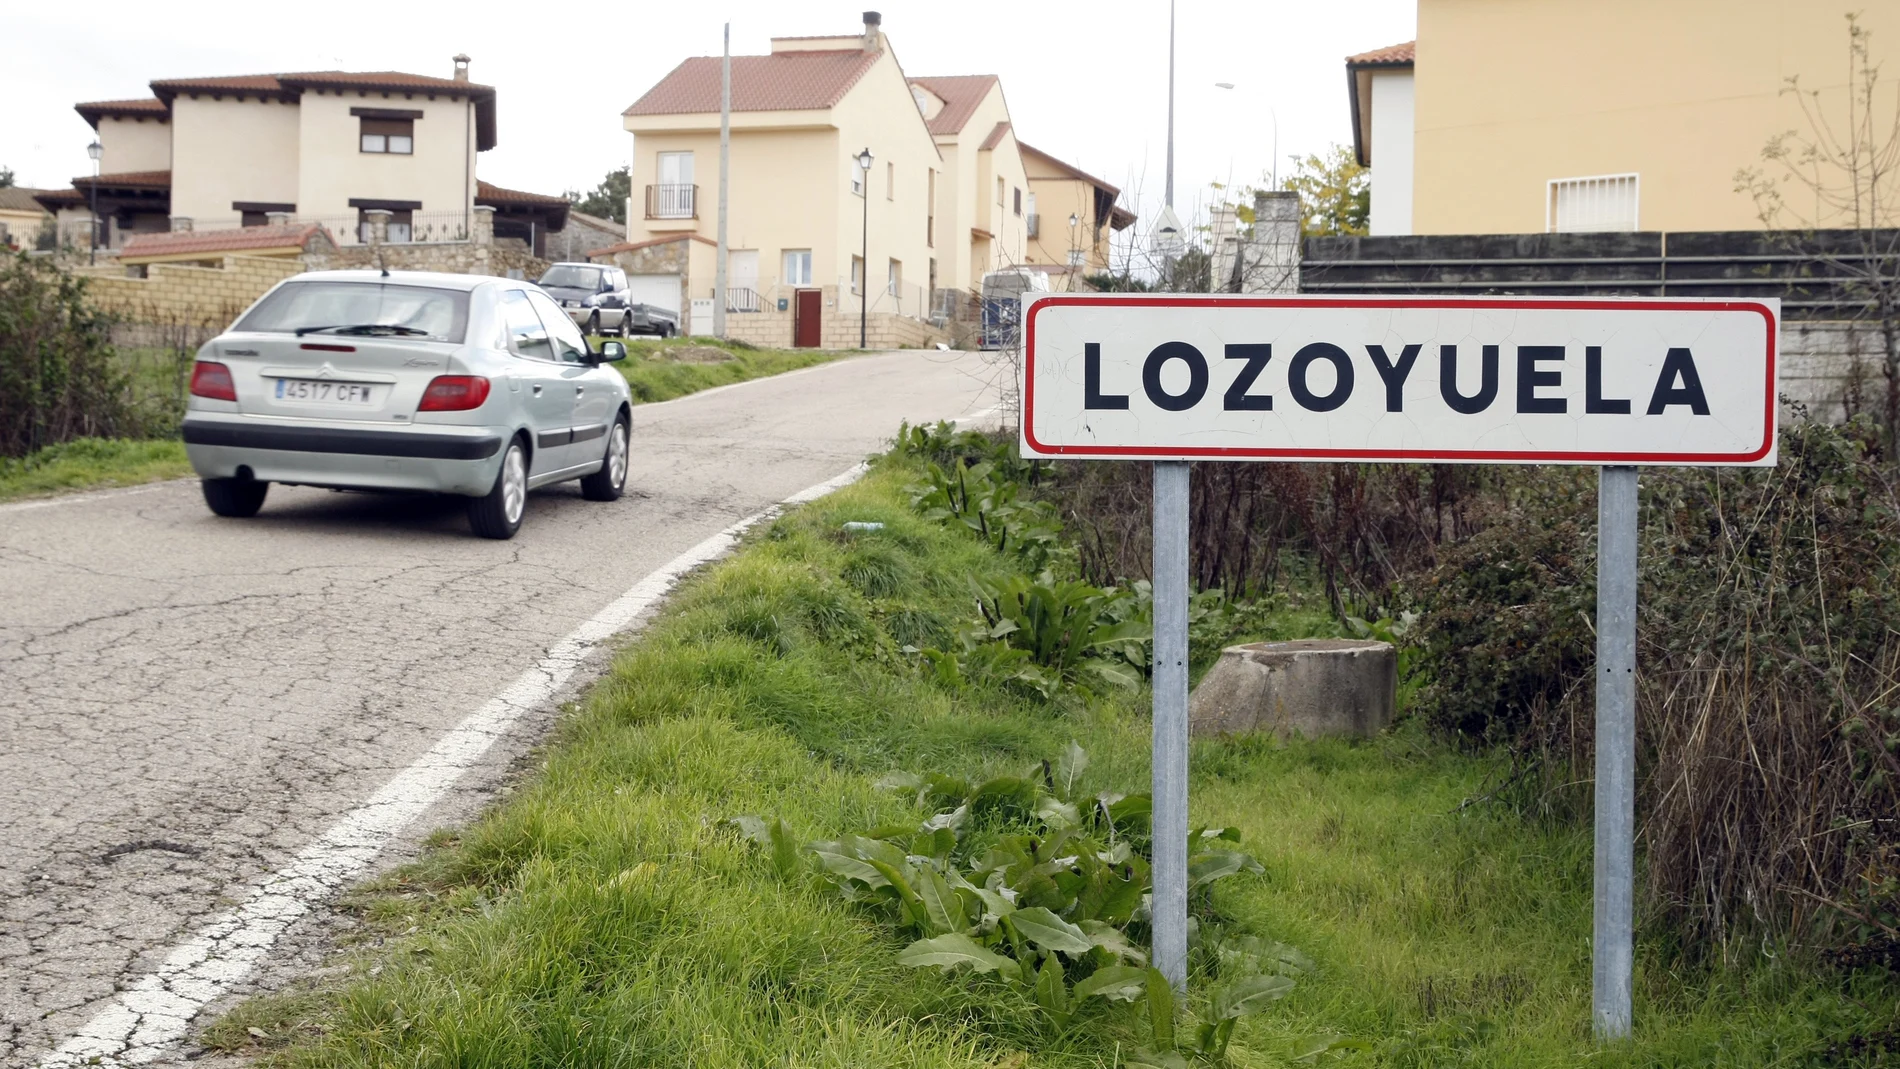 Lozoyuela tiene 1.408 habitantes empadronados